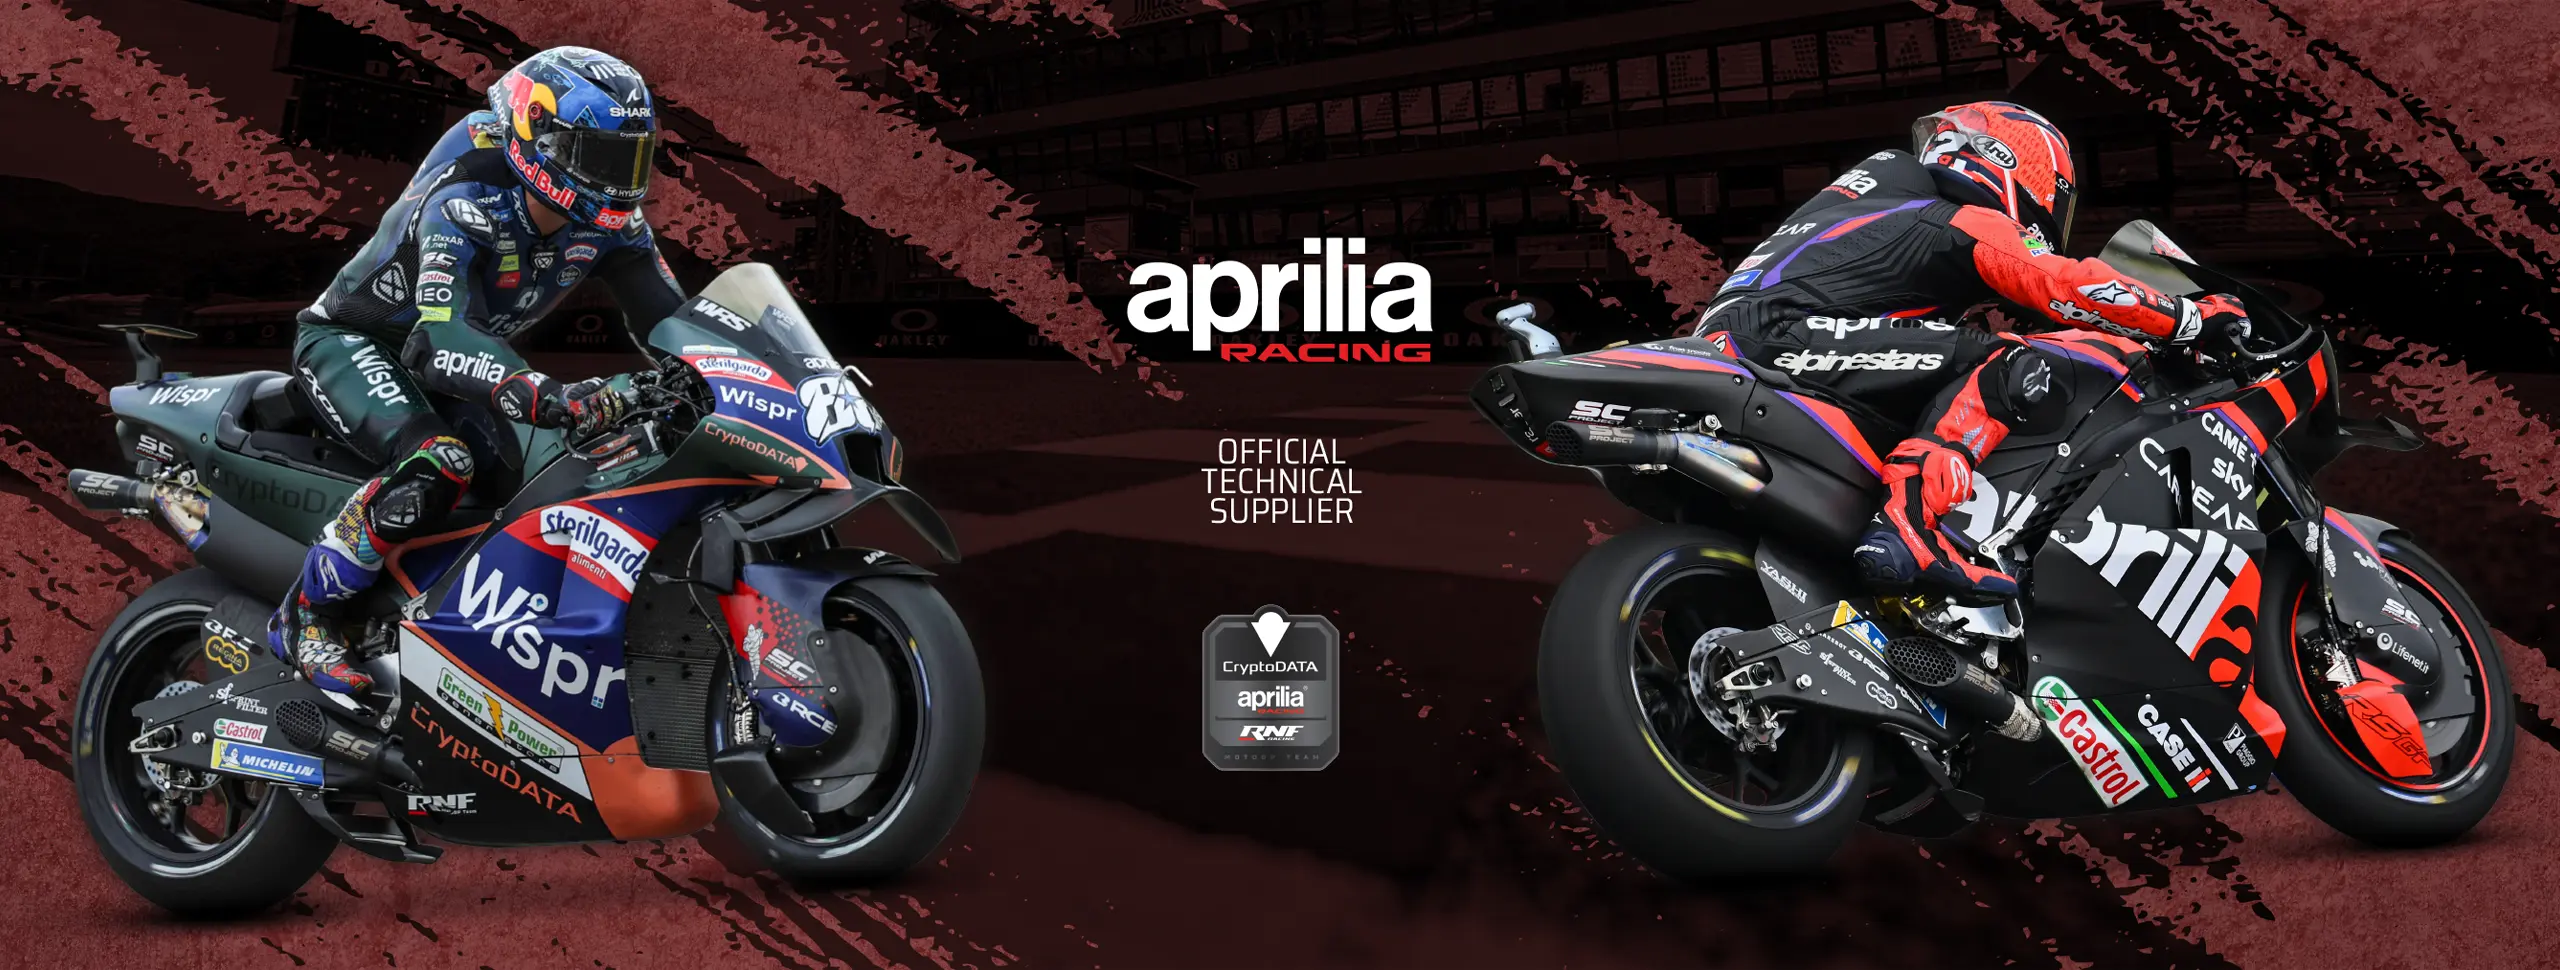 Aprilia MotoGP Official Technical Supplier